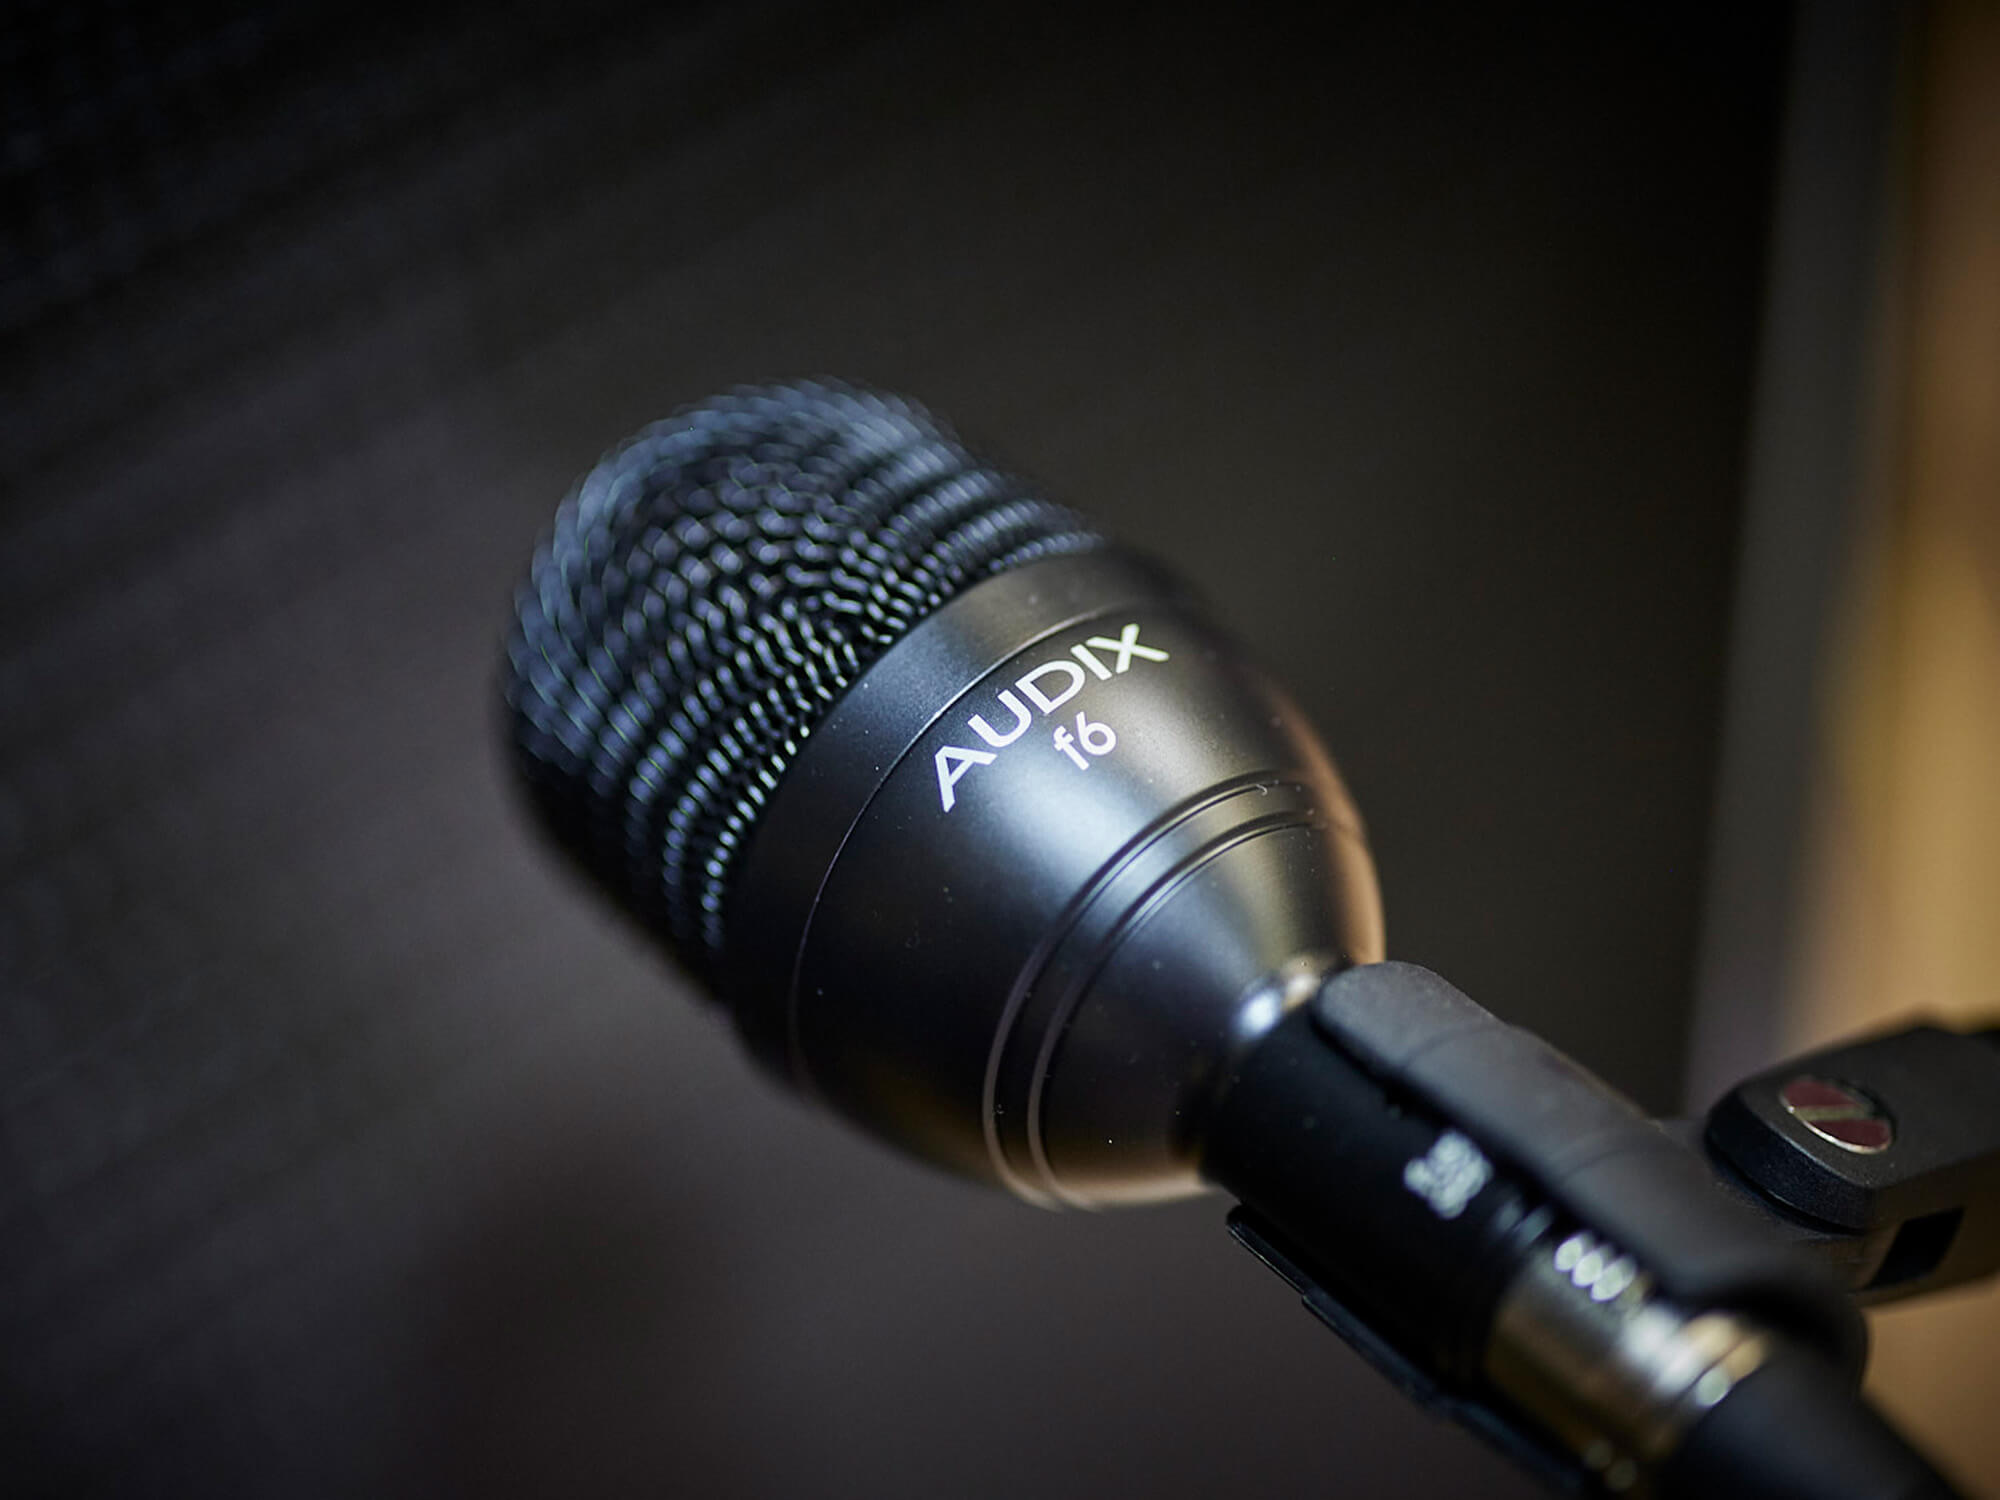 An Audix F6 microphone